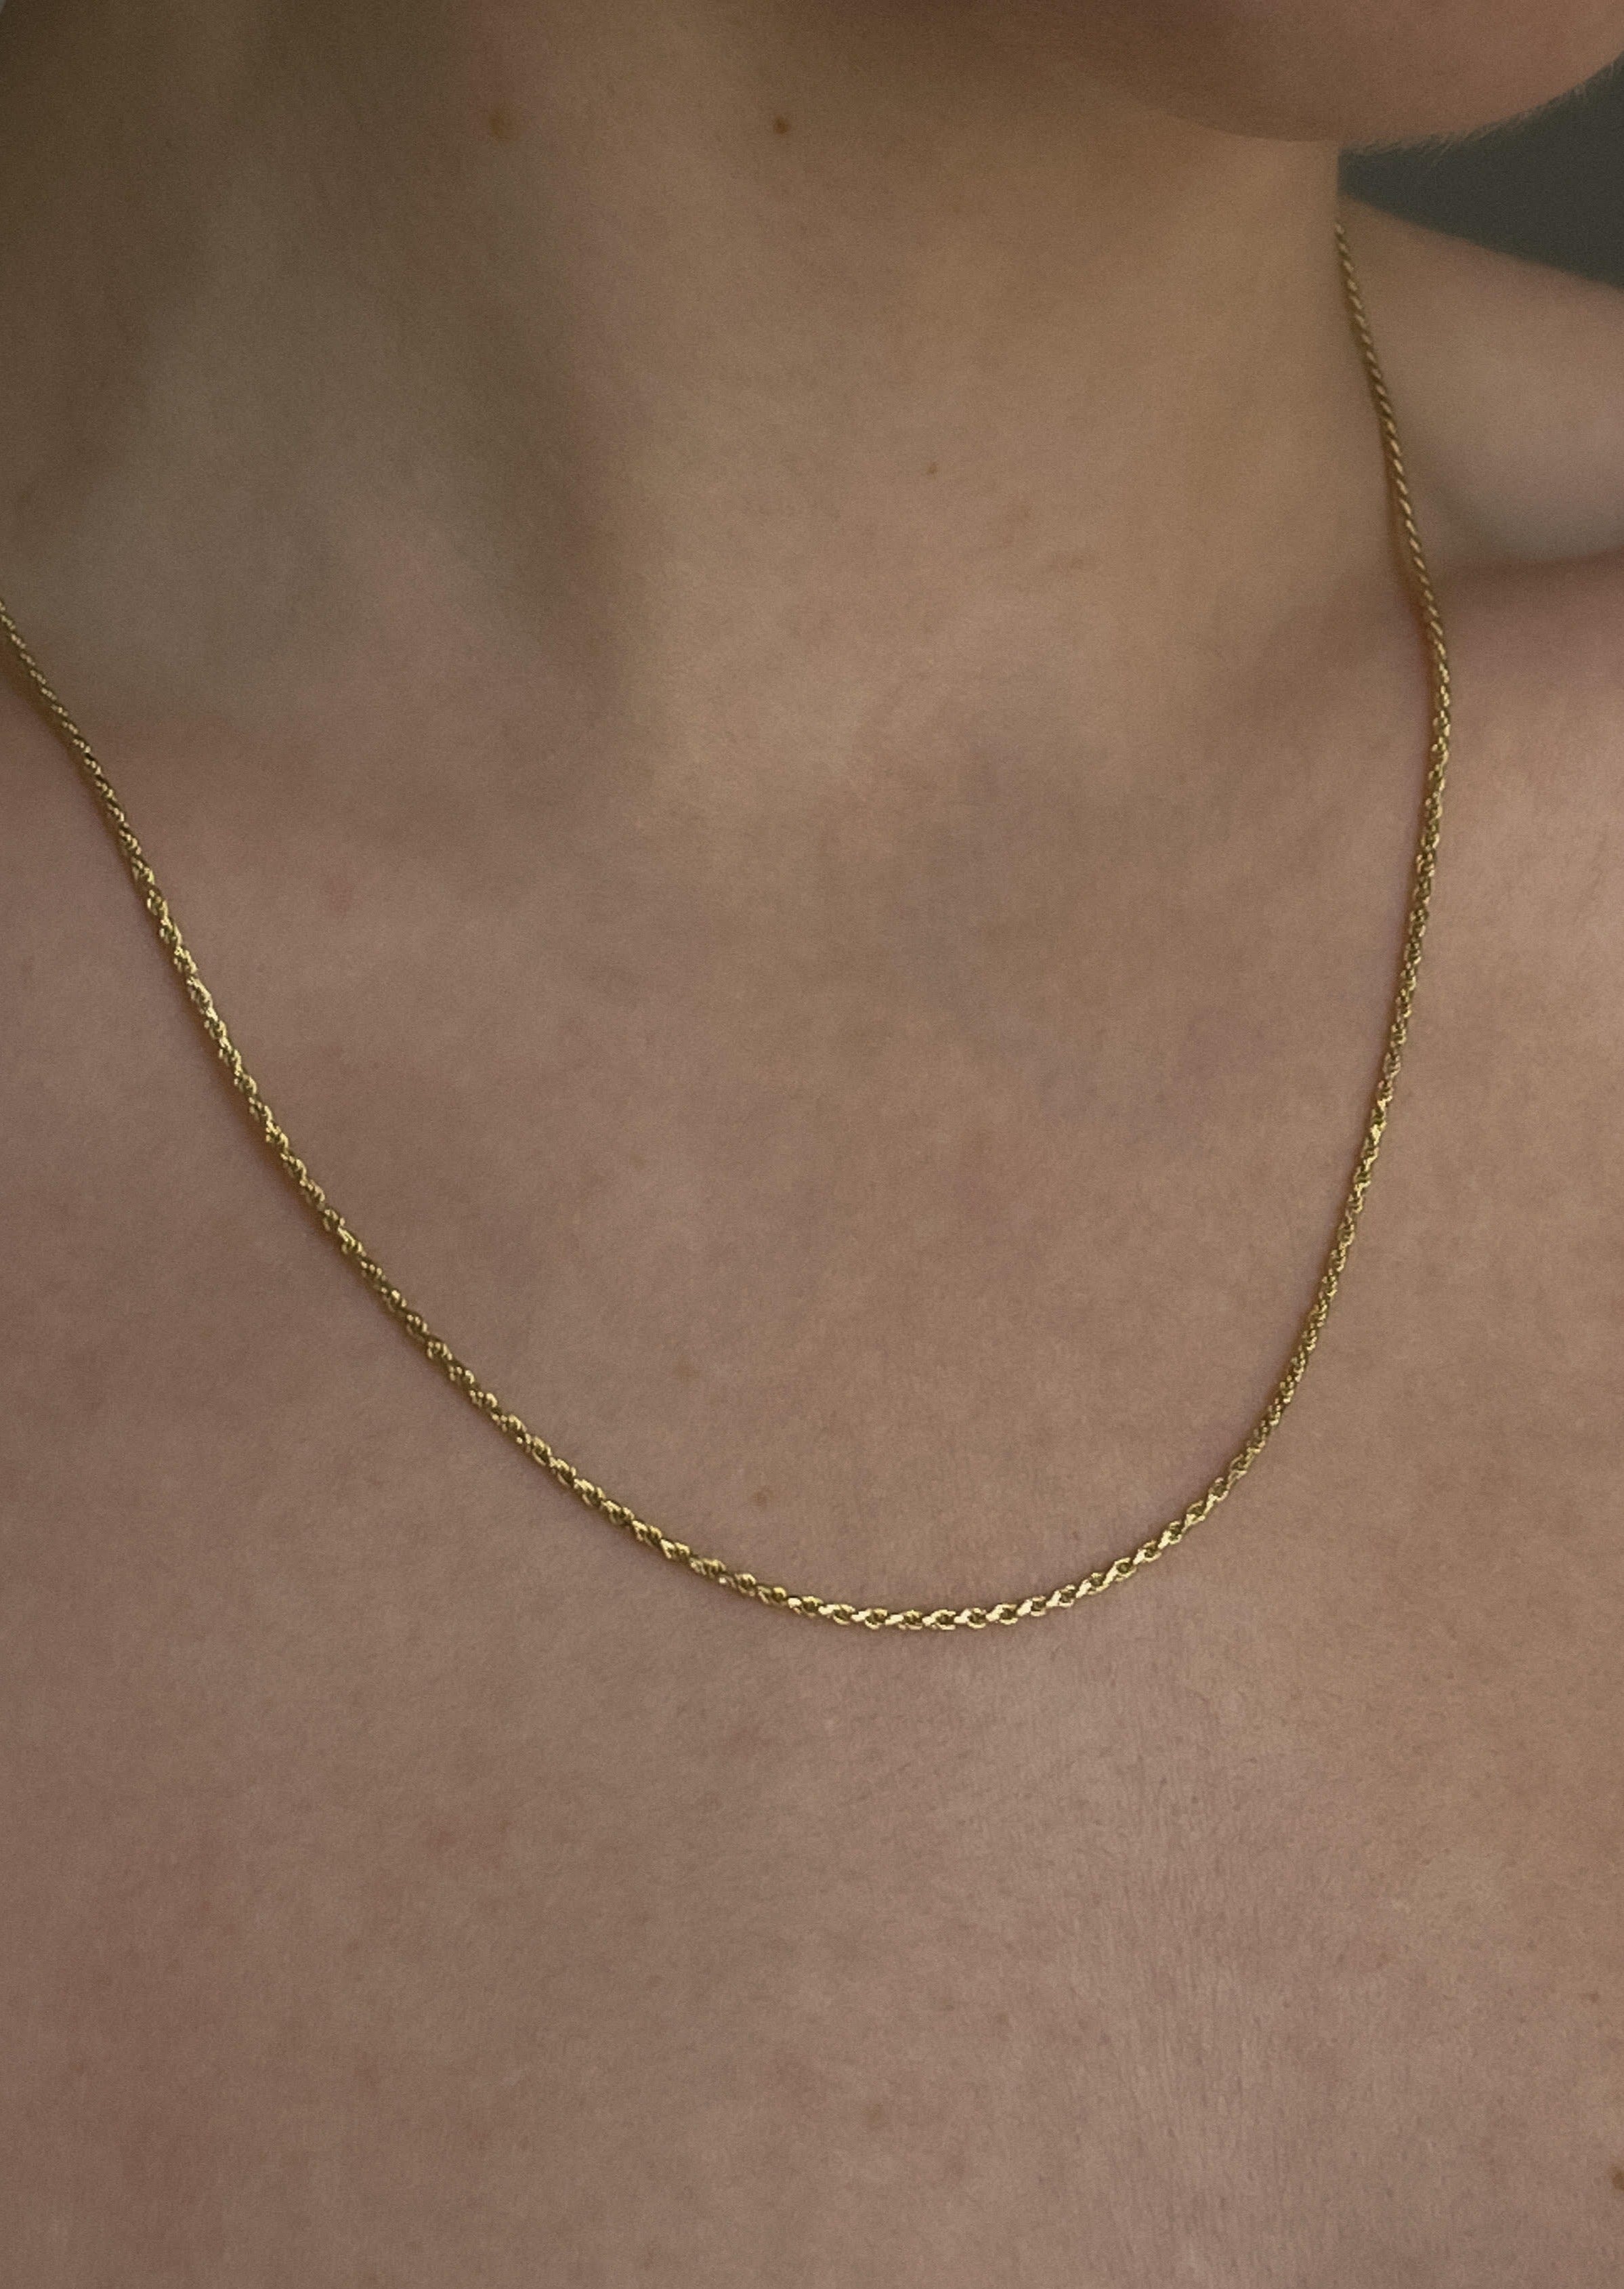 alt="Petite Rope Chain Necklace"